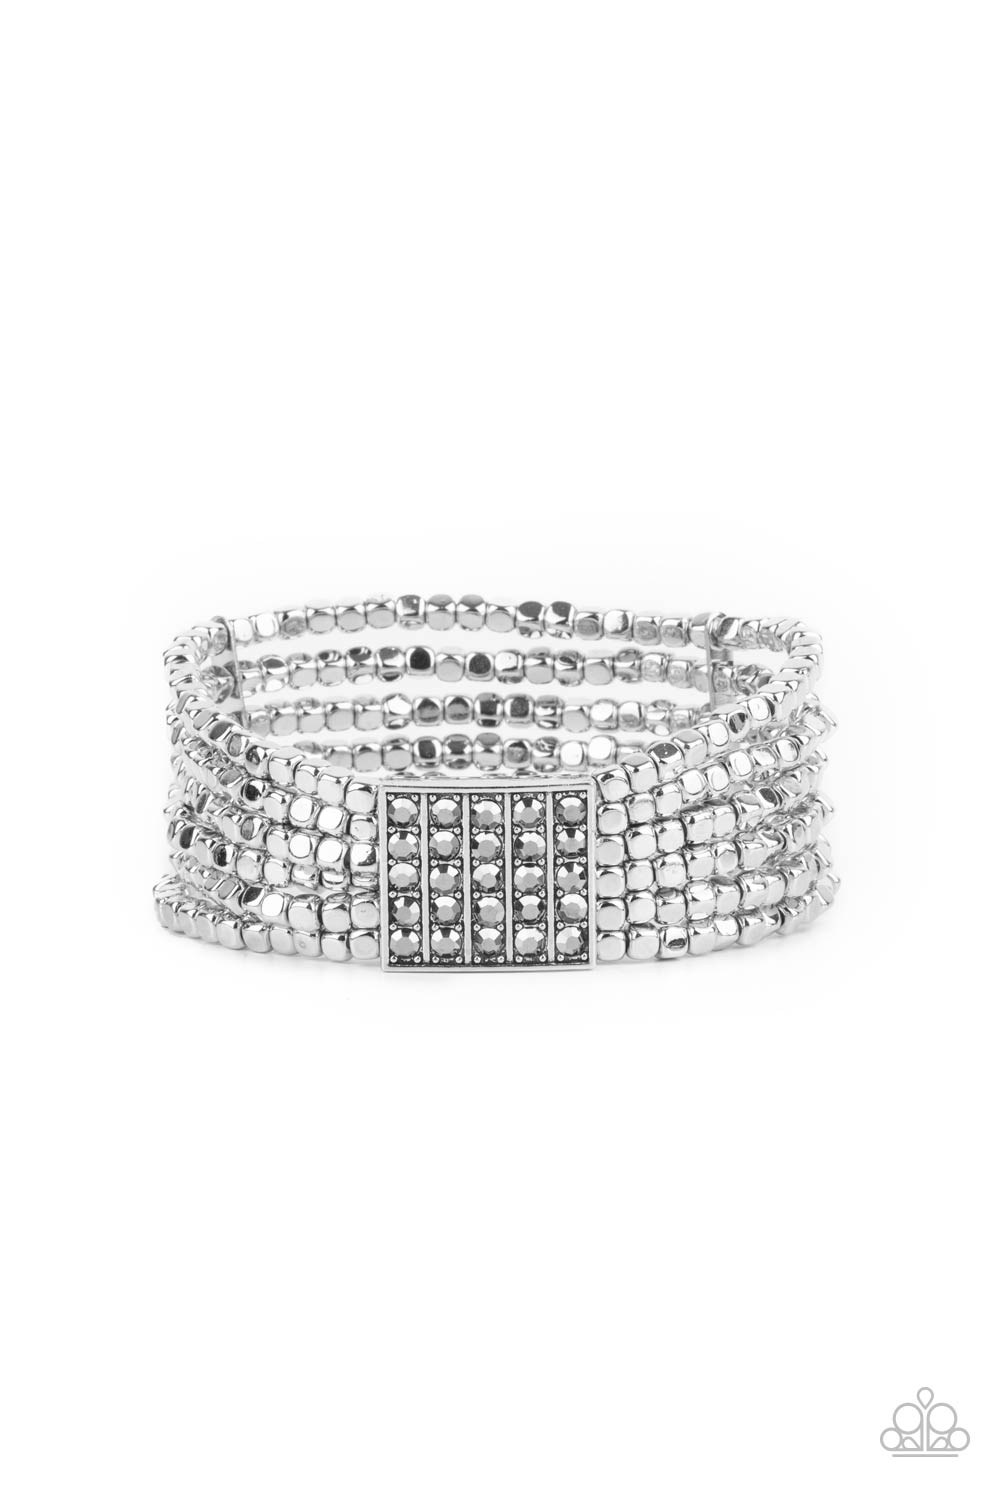 Star-Studded Showcase Silver
Bracelet - Daria's Blings N Things